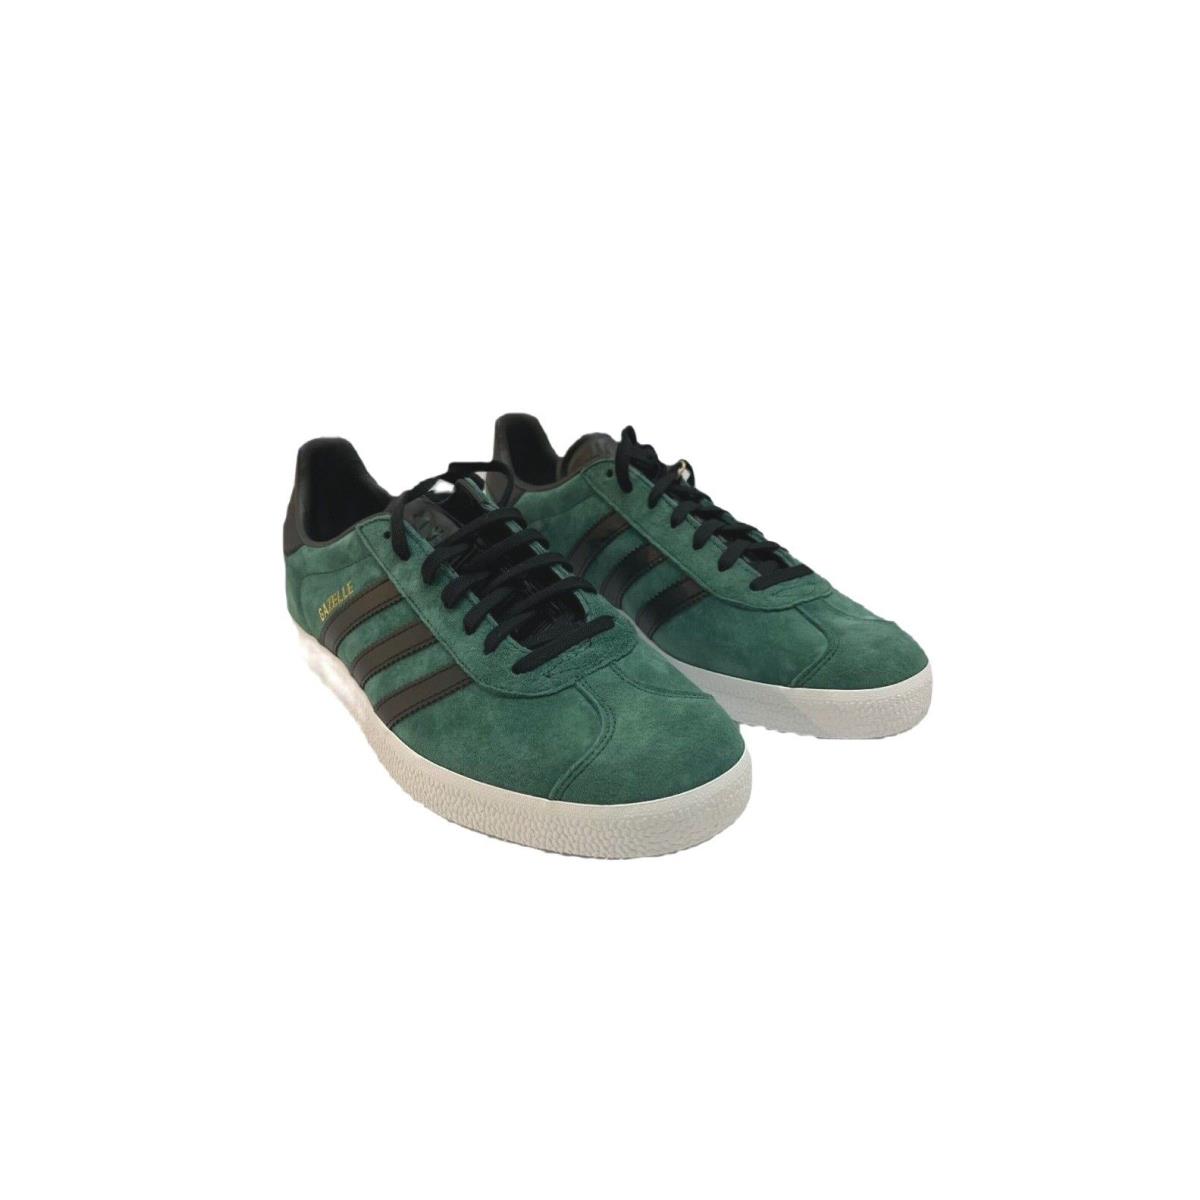 Adidas Men`s Gazelle Casual/activewear Shoes - Collegiate Green/Black/Gold Metallic